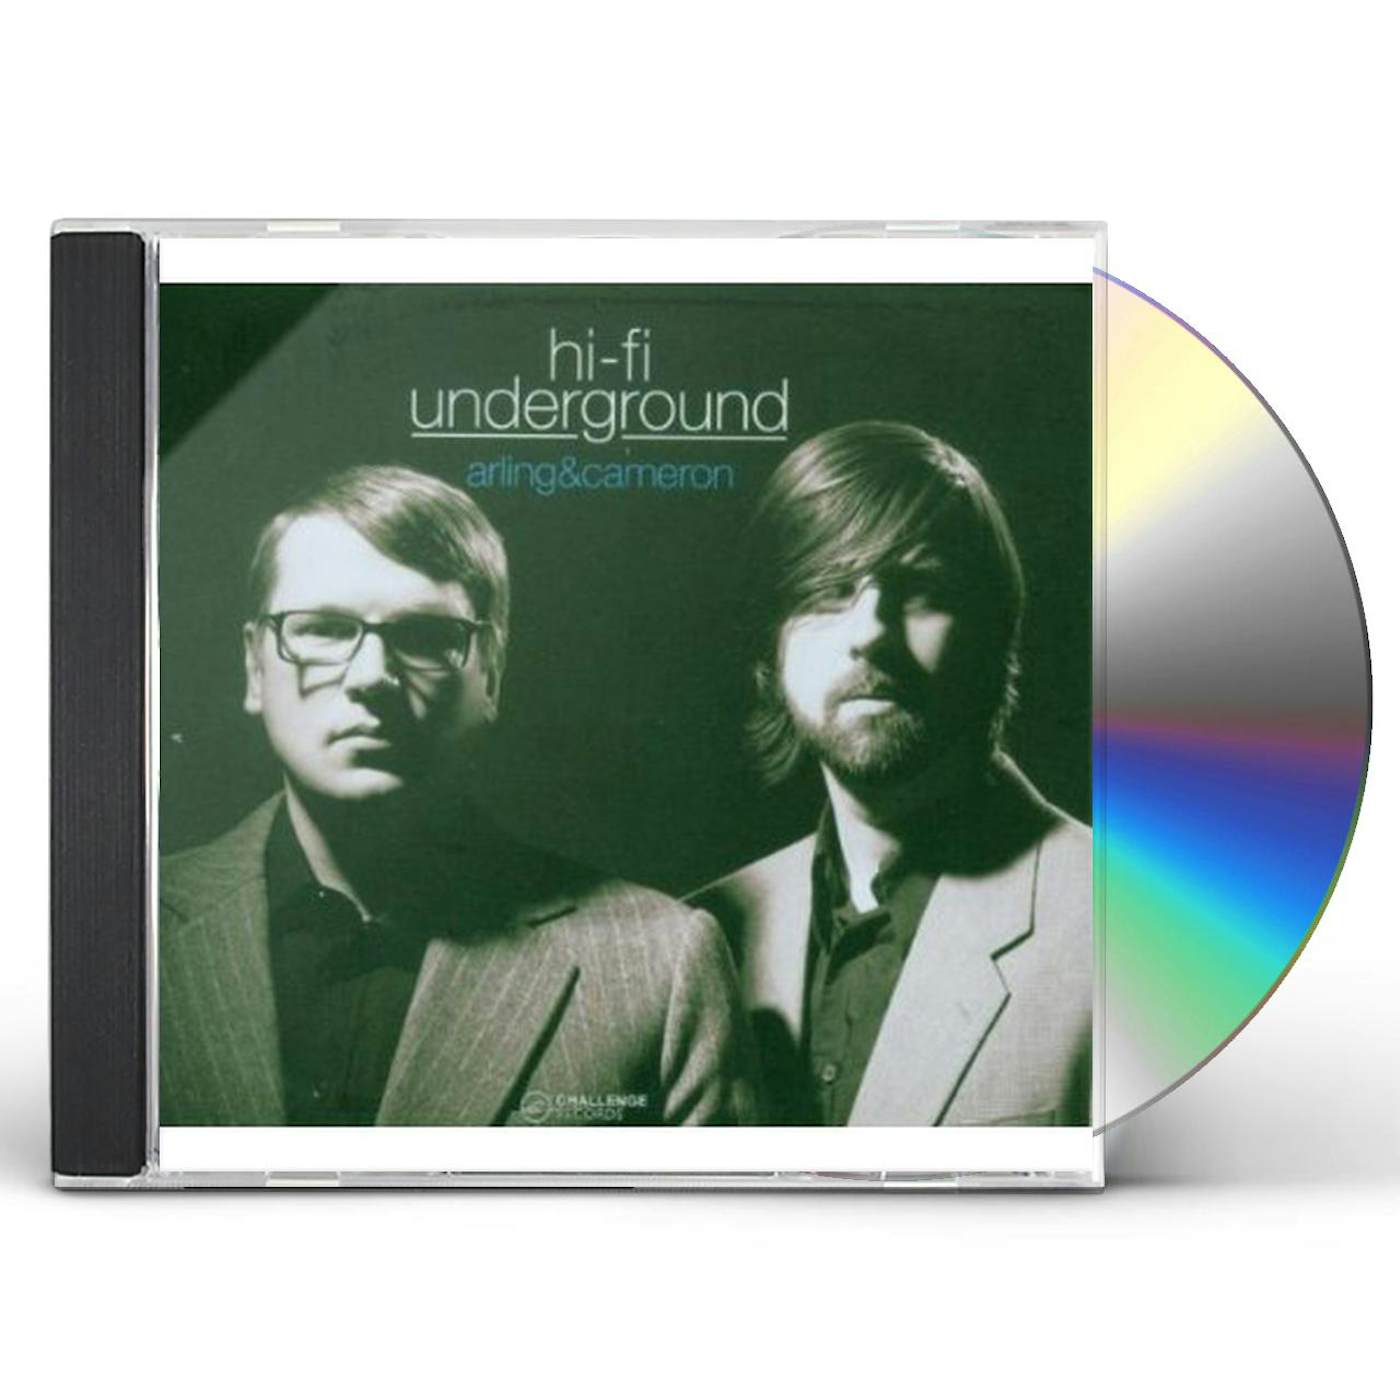 Arling & Cameron HI-FI UNDERGROUND CD